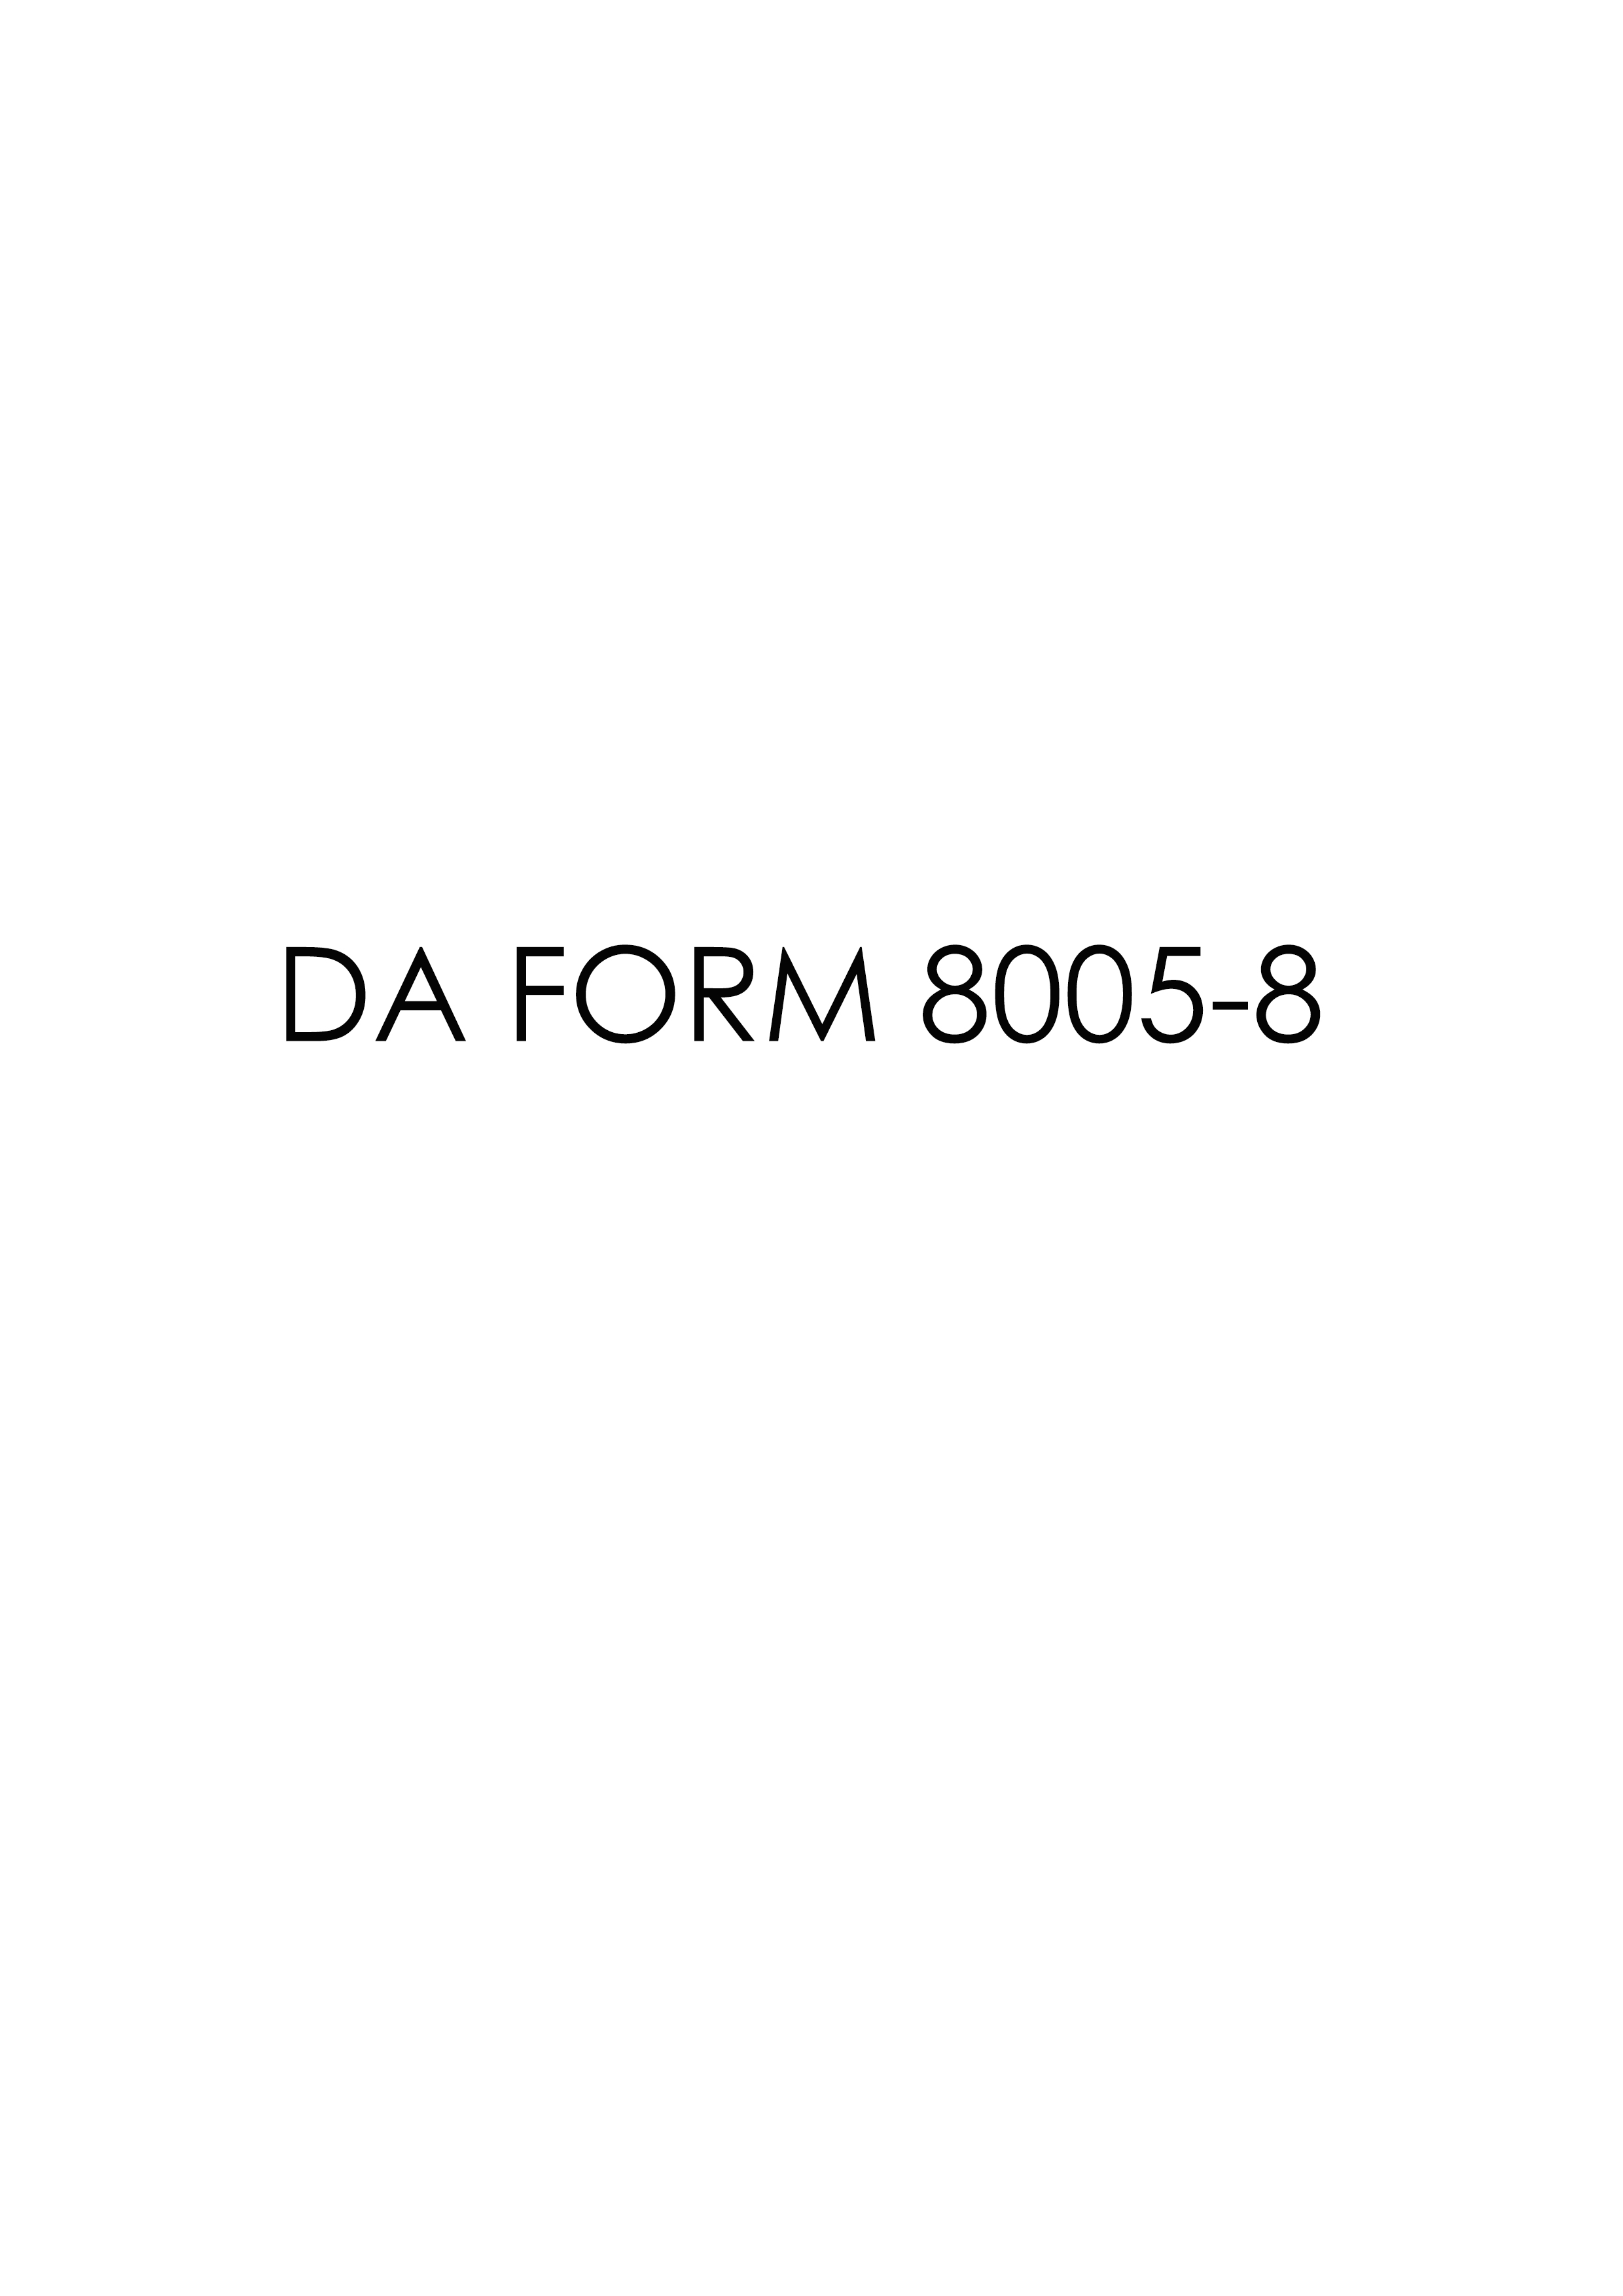 Download da form 8005-8